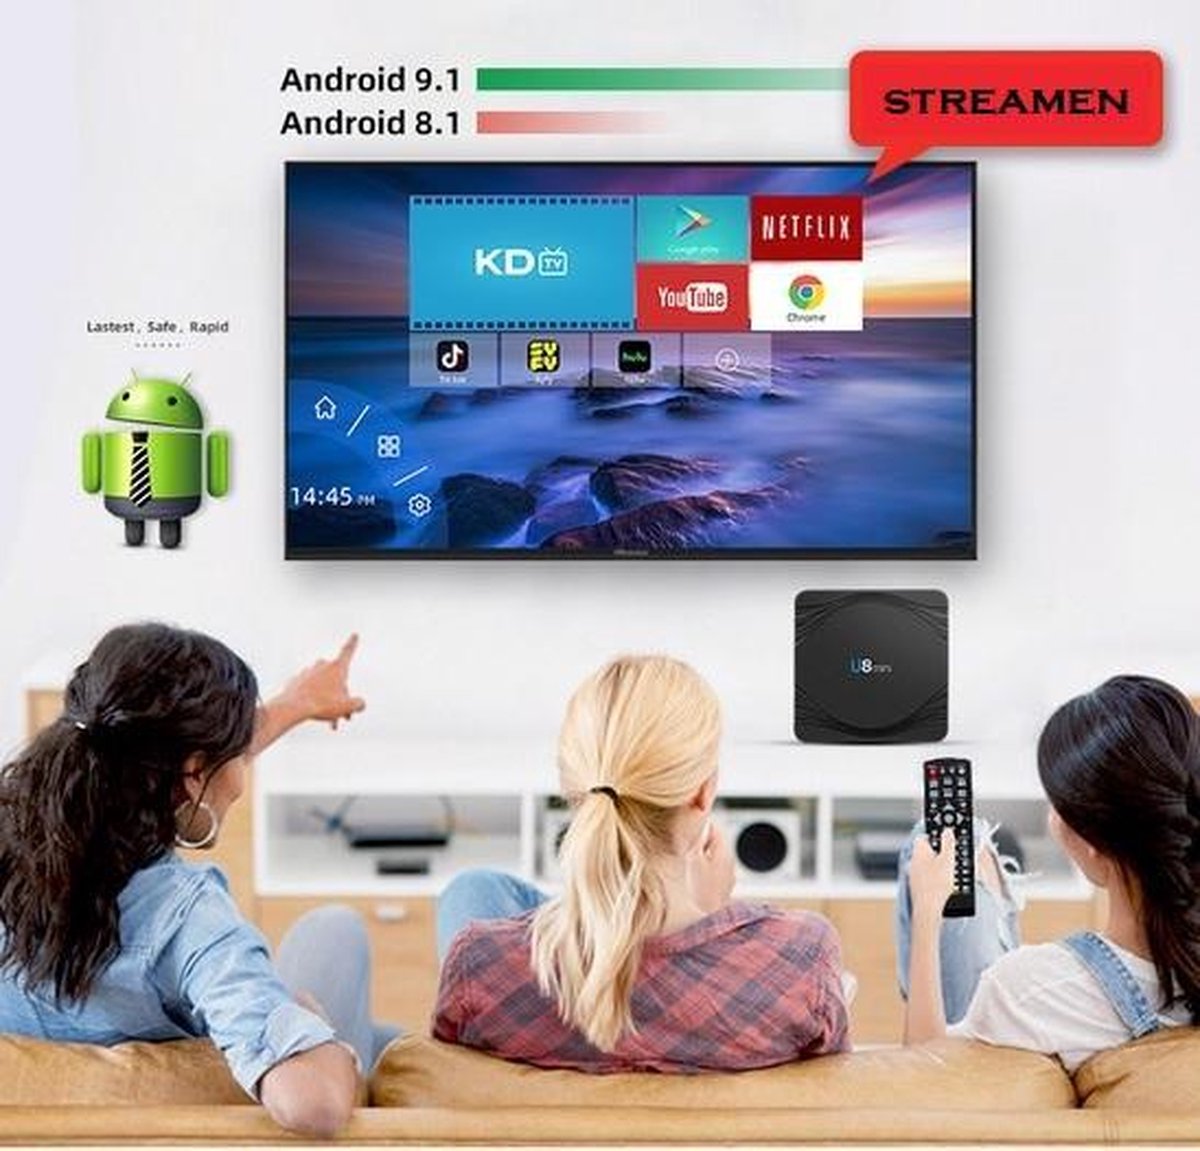 Android Tv Box 4K 16GB / Android 9 Tv Box / IPTV Box Wifi / Tv Box 4K / Mediaplayer voor Tv / Tv Box - U8 Mini